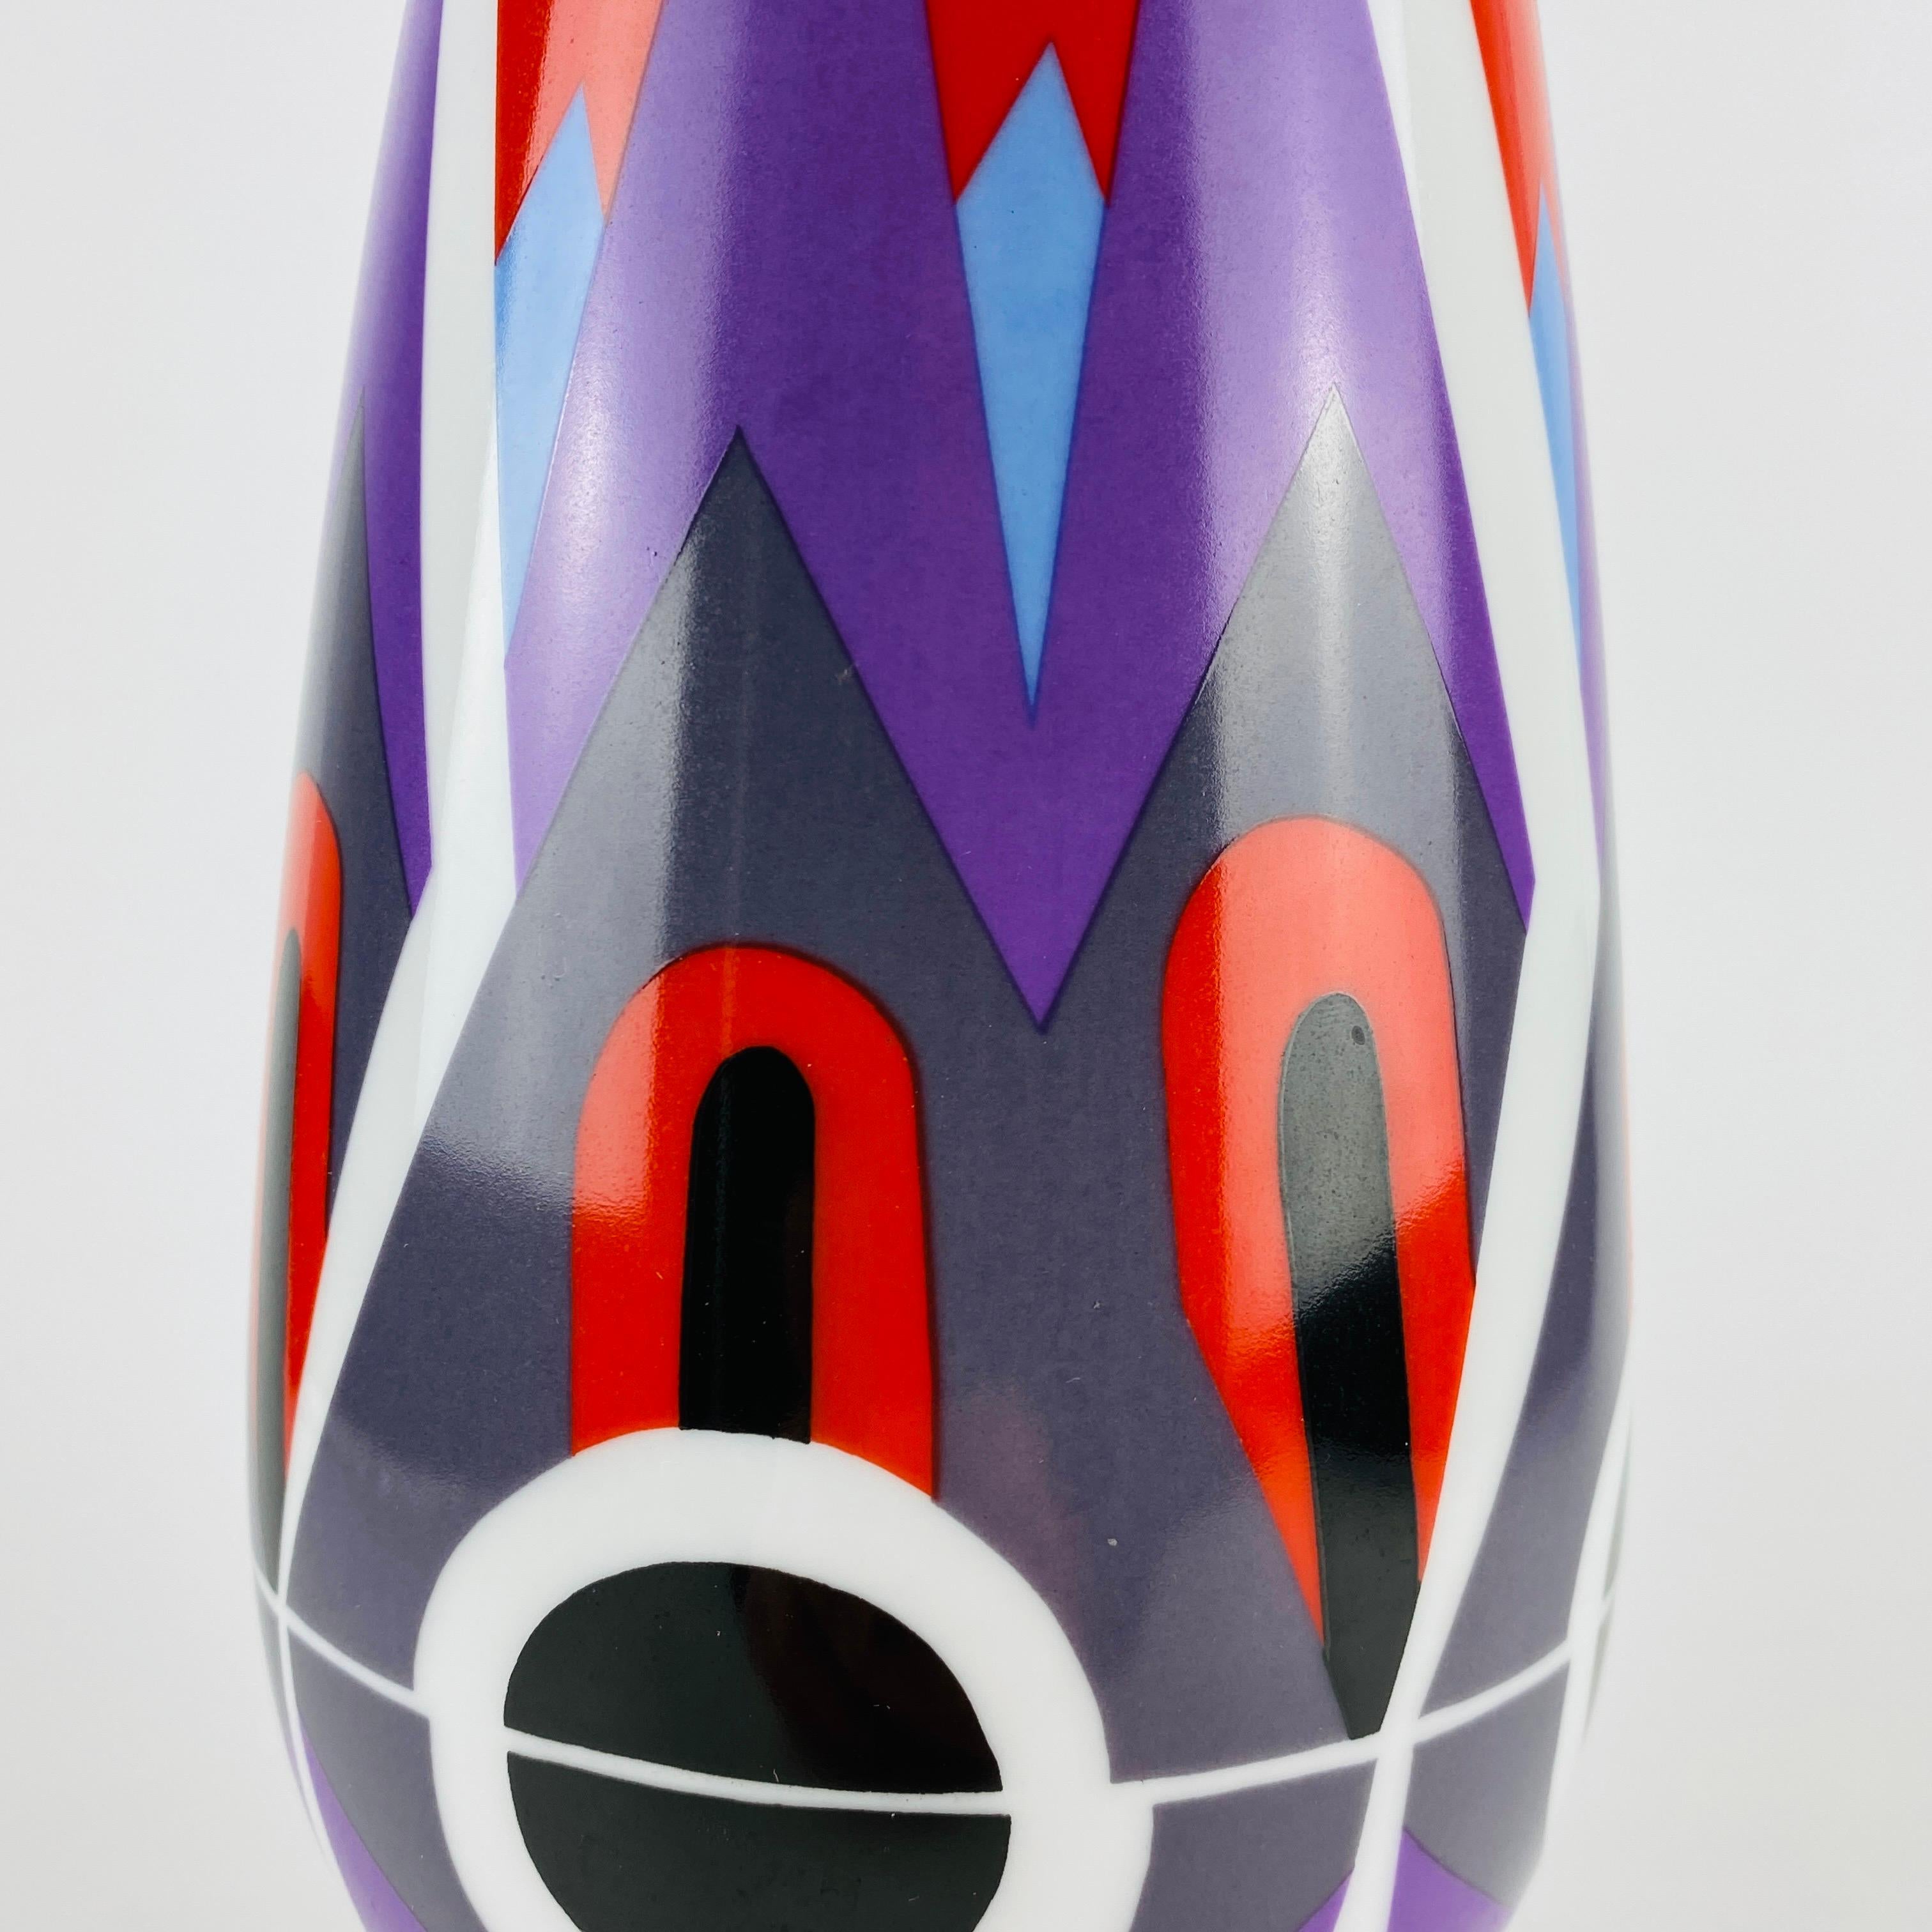 Porcelain Alessi Tendentse Vase by Robert Venturi for A. Mendini 100% Make-Up Serie N90